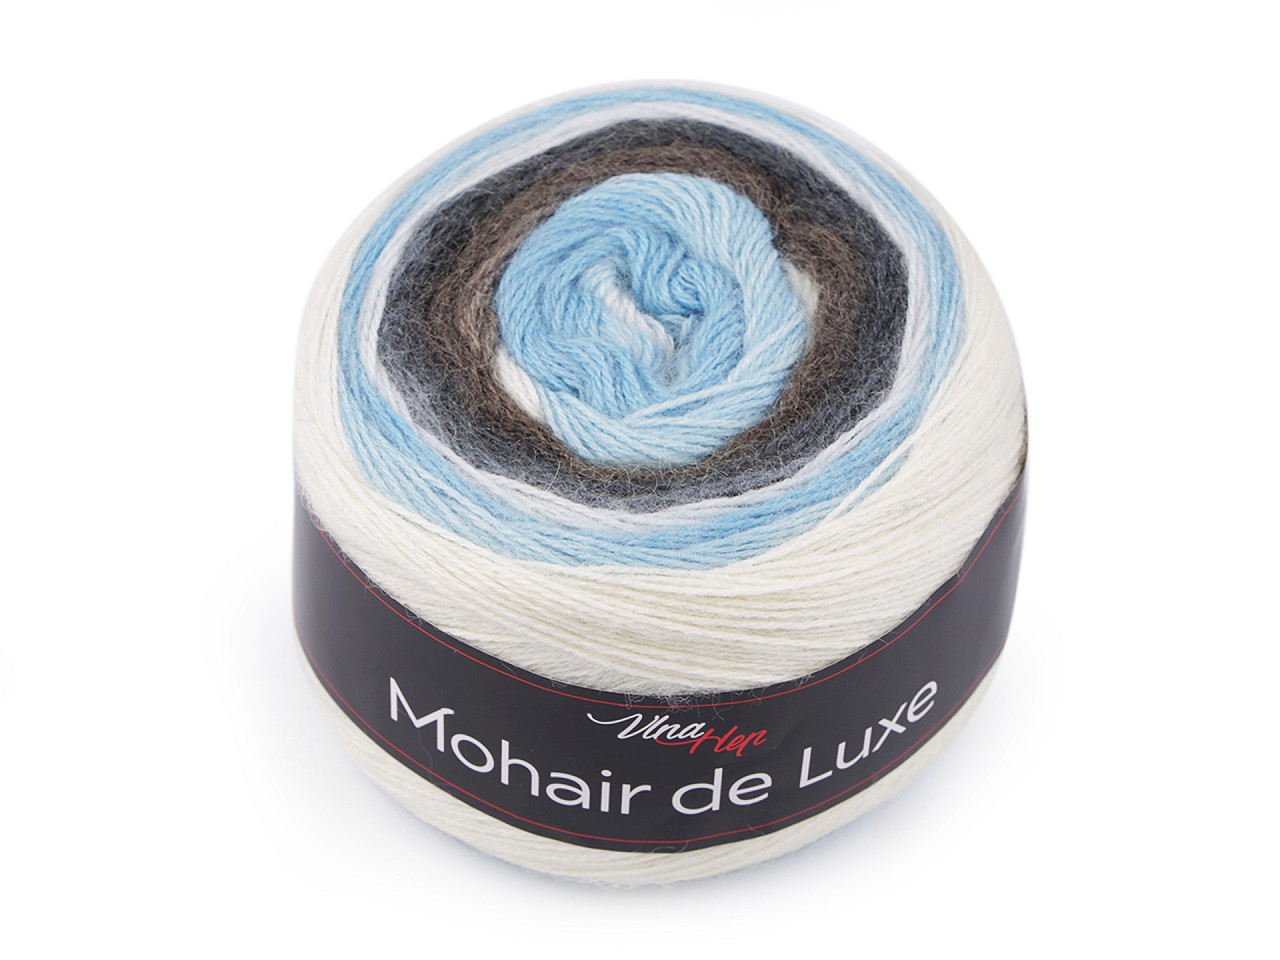 Pletací příze Mohair de Luxe 150 g, barva 4 (7405) modrá světlá